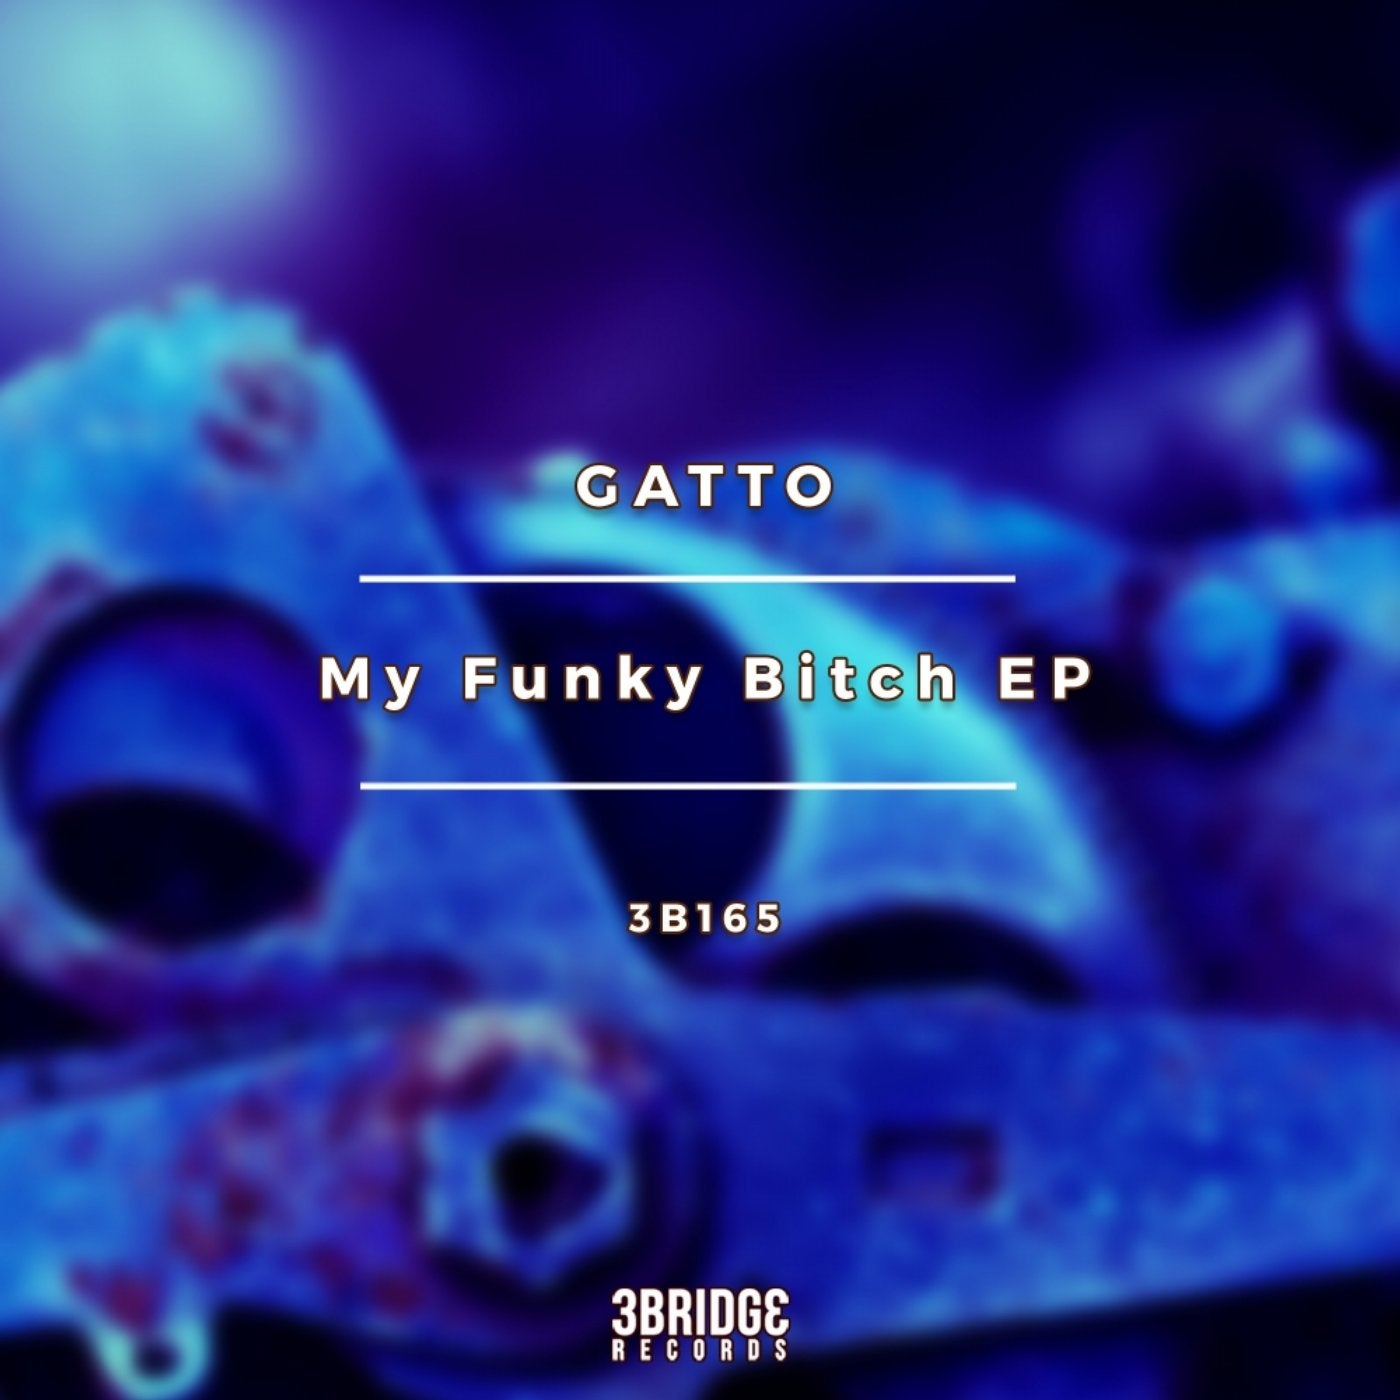 My Funky Bitch EP